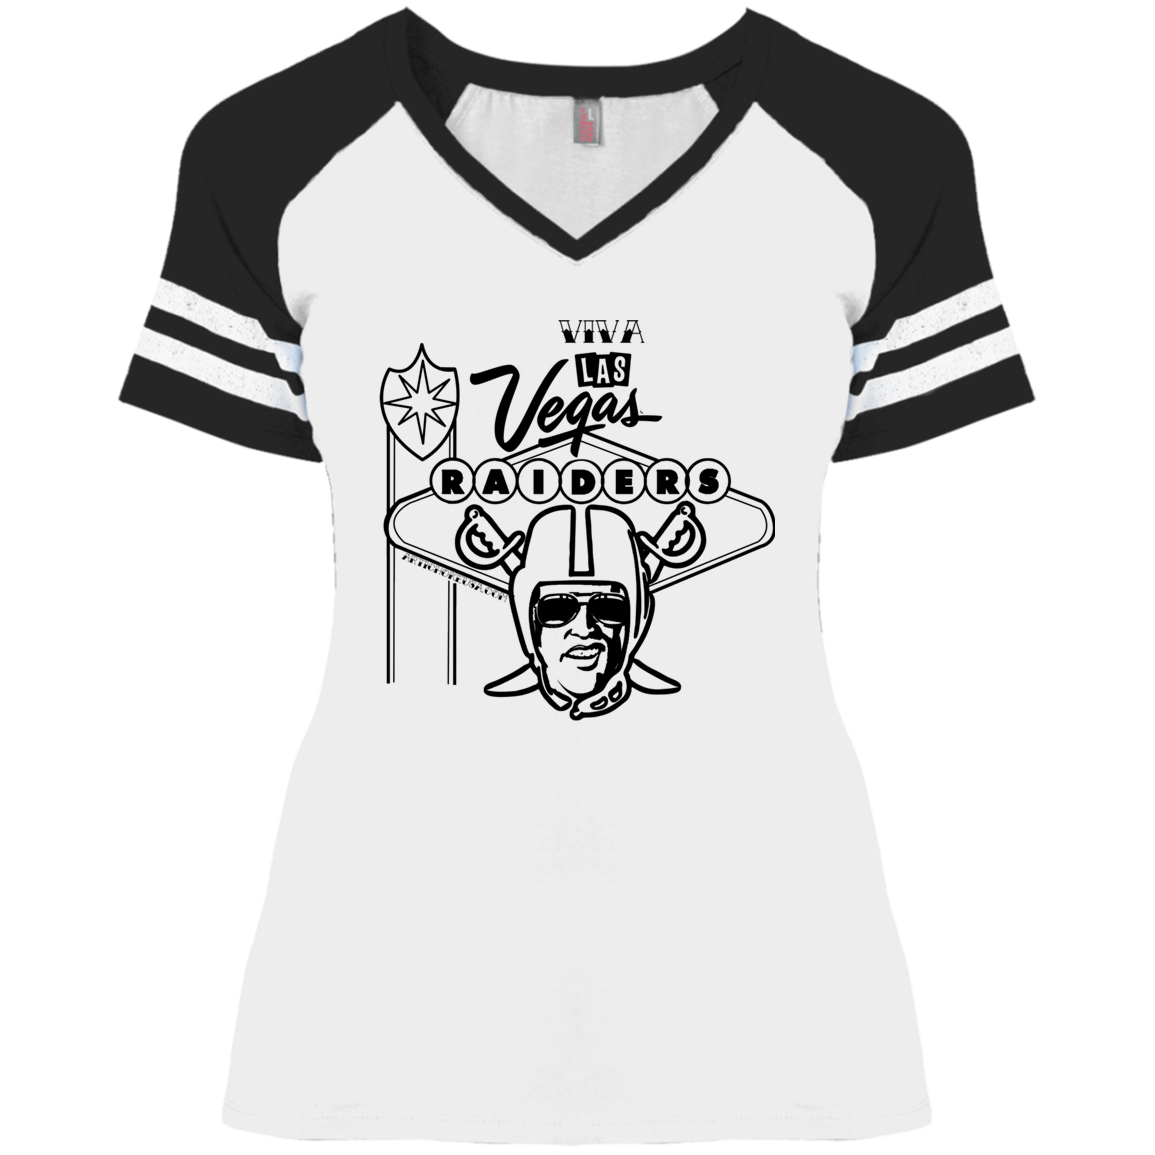 ArtichokeUSA Custom Design. Las Vegas Raiders. Las Vegas / Elvis Presley Parody Fan Art. Let's Create Your Own Team Design Today. Ladies' Game V-Neck T-Shirt